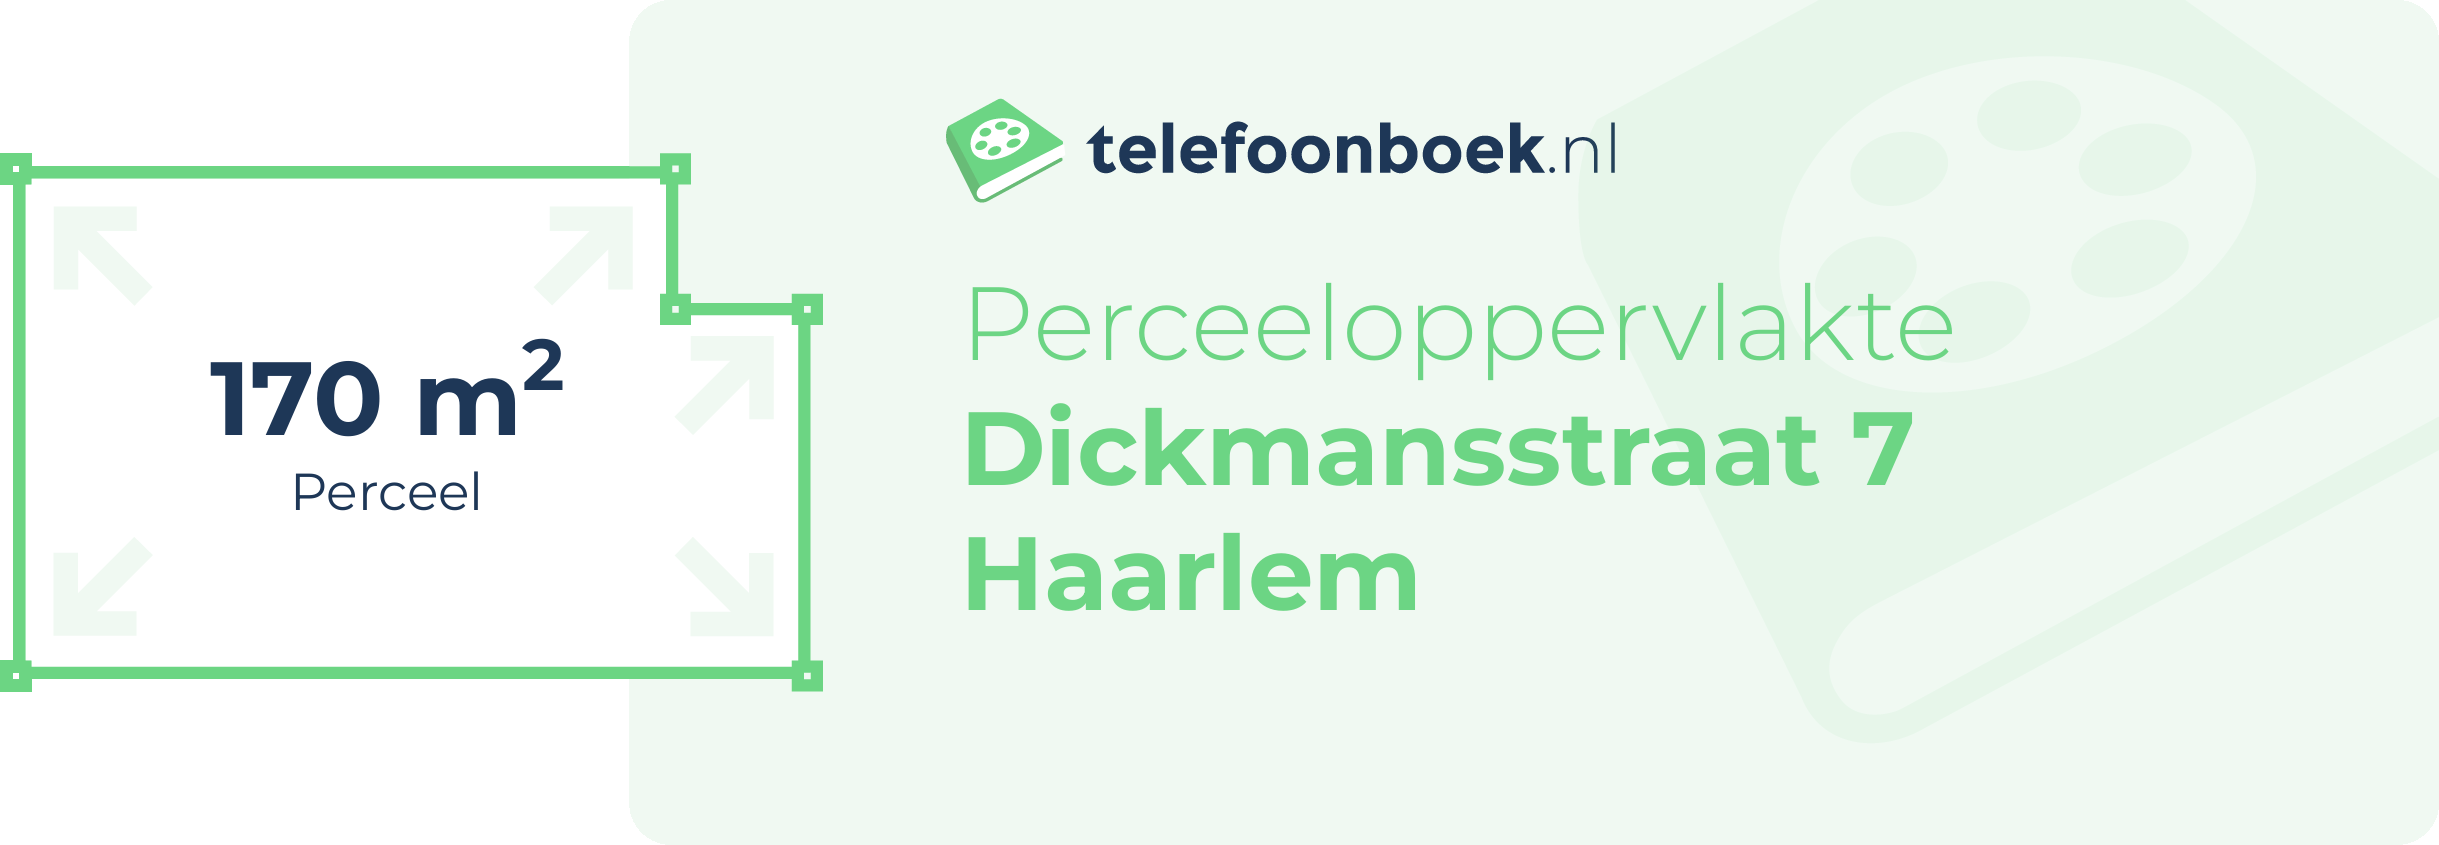 Perceeloppervlakte Dickmansstraat 7 Haarlem